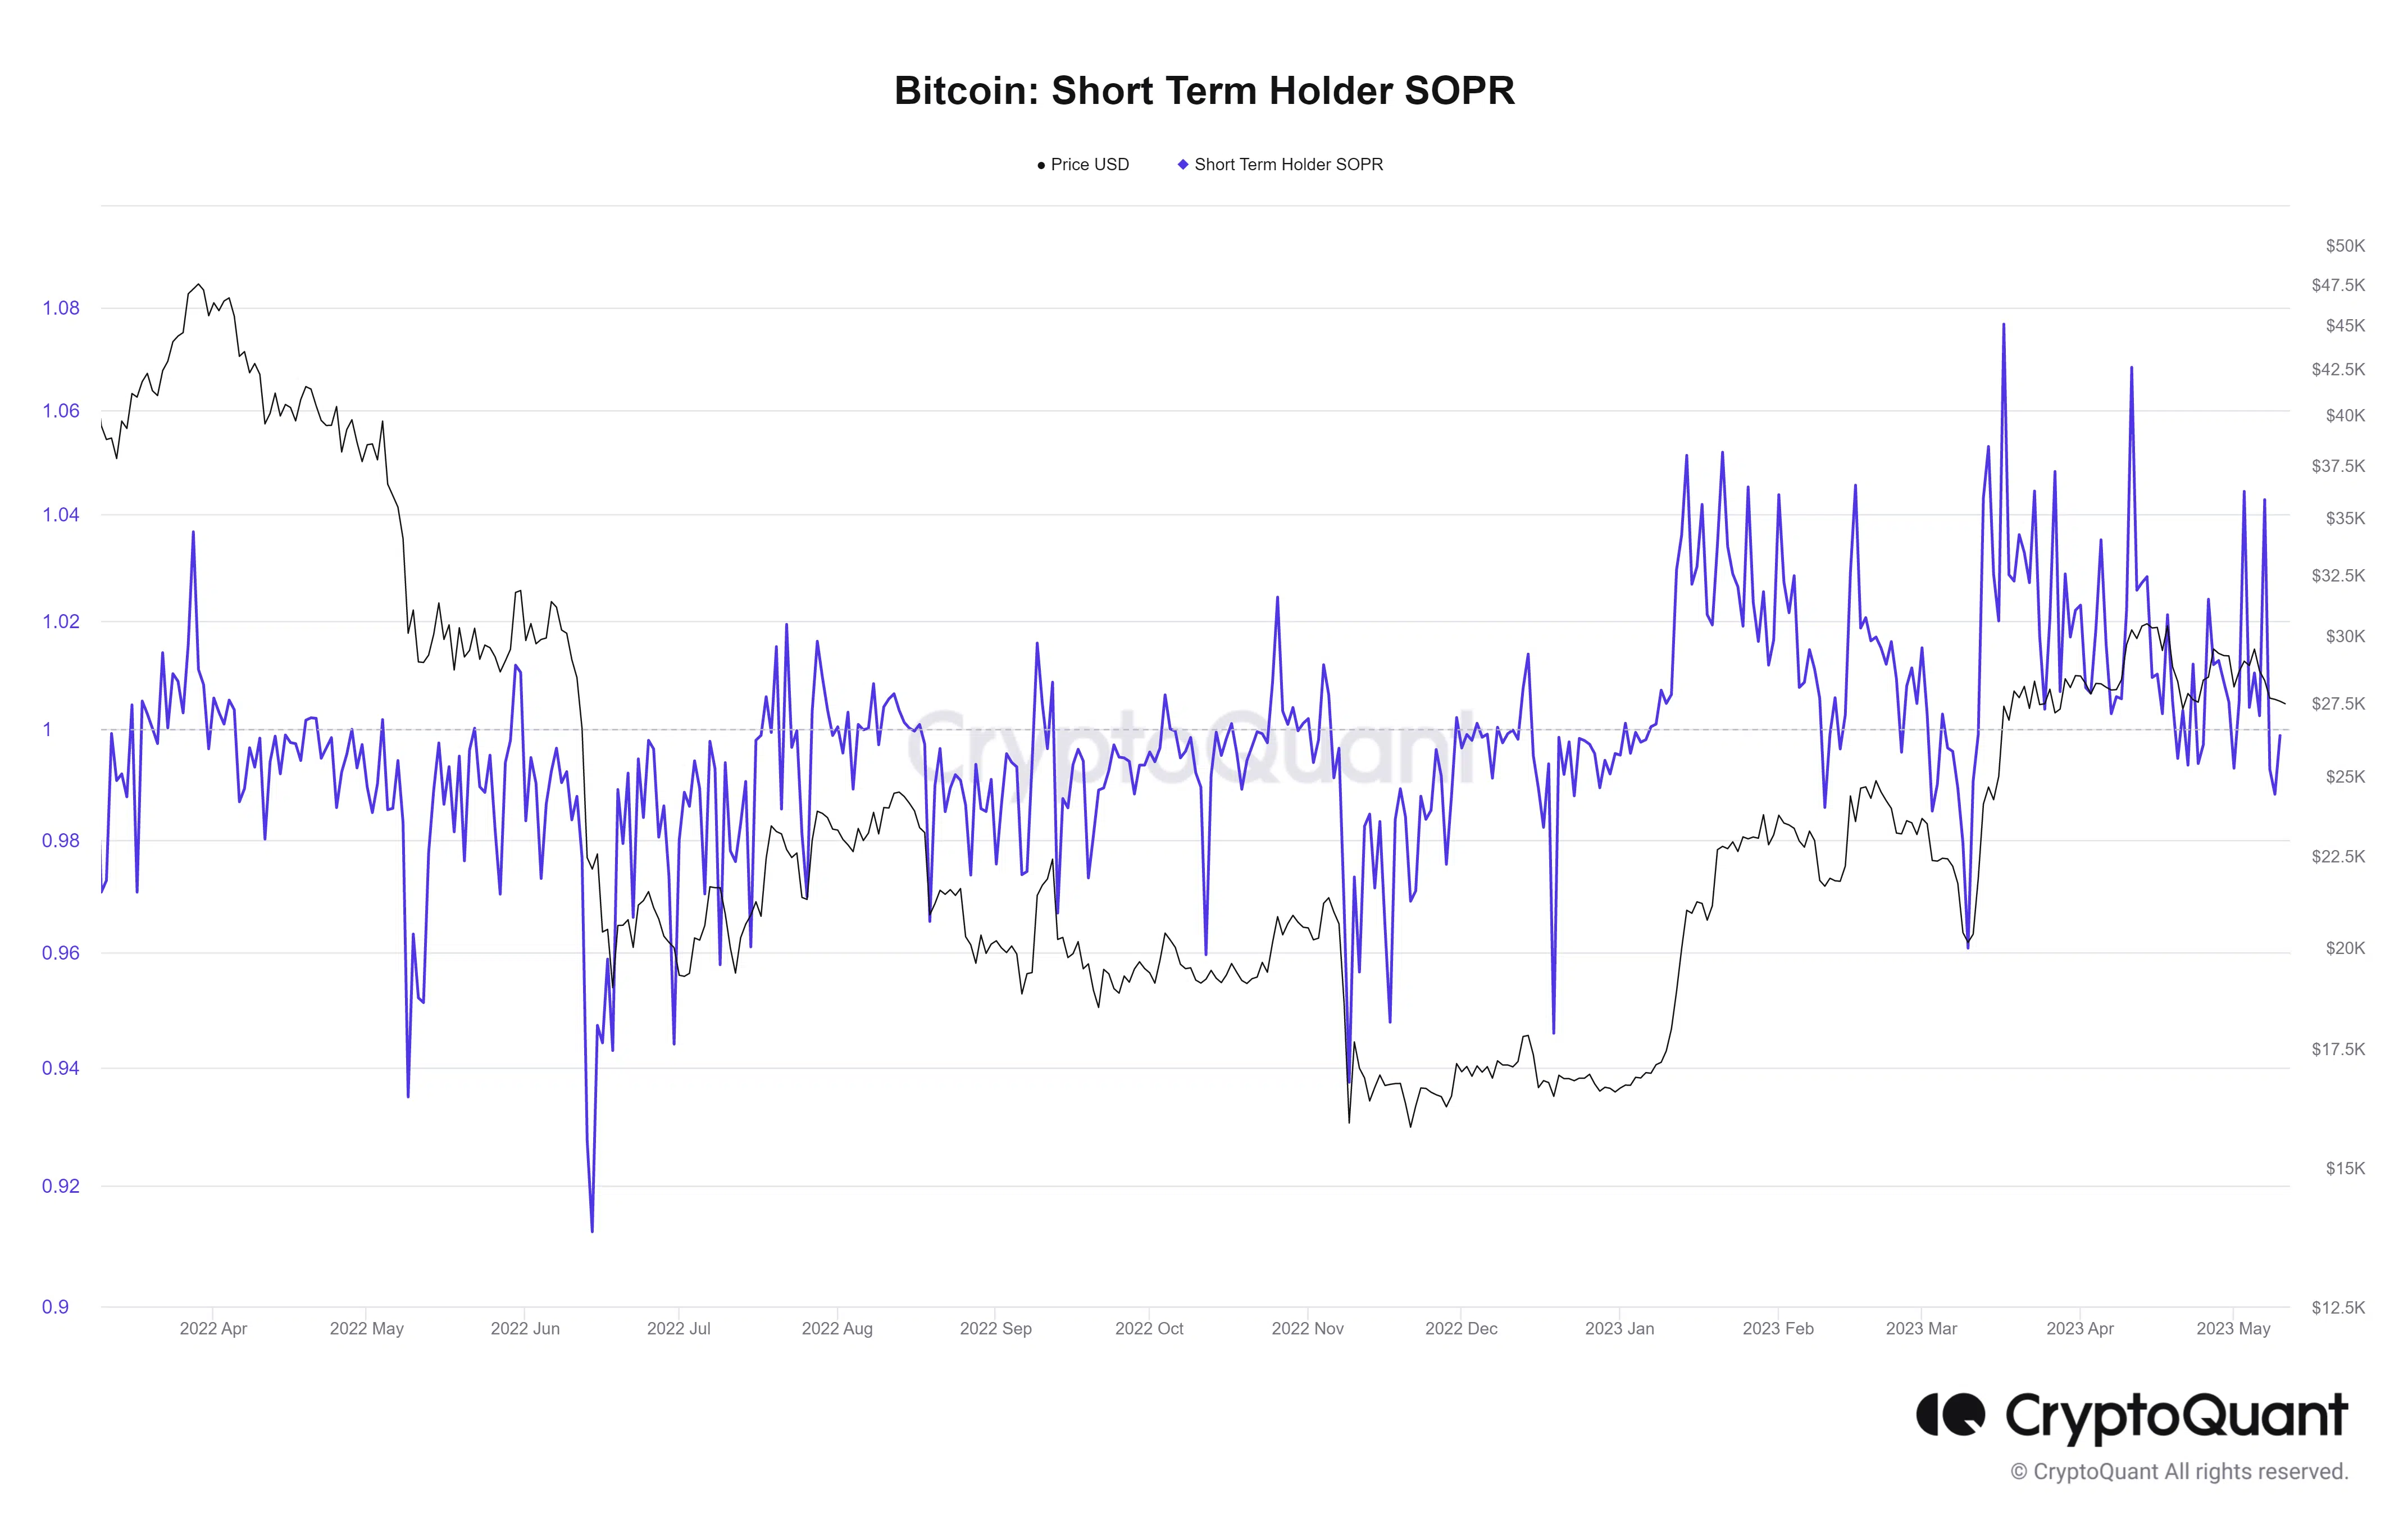 Bitcoin short-term SOPR